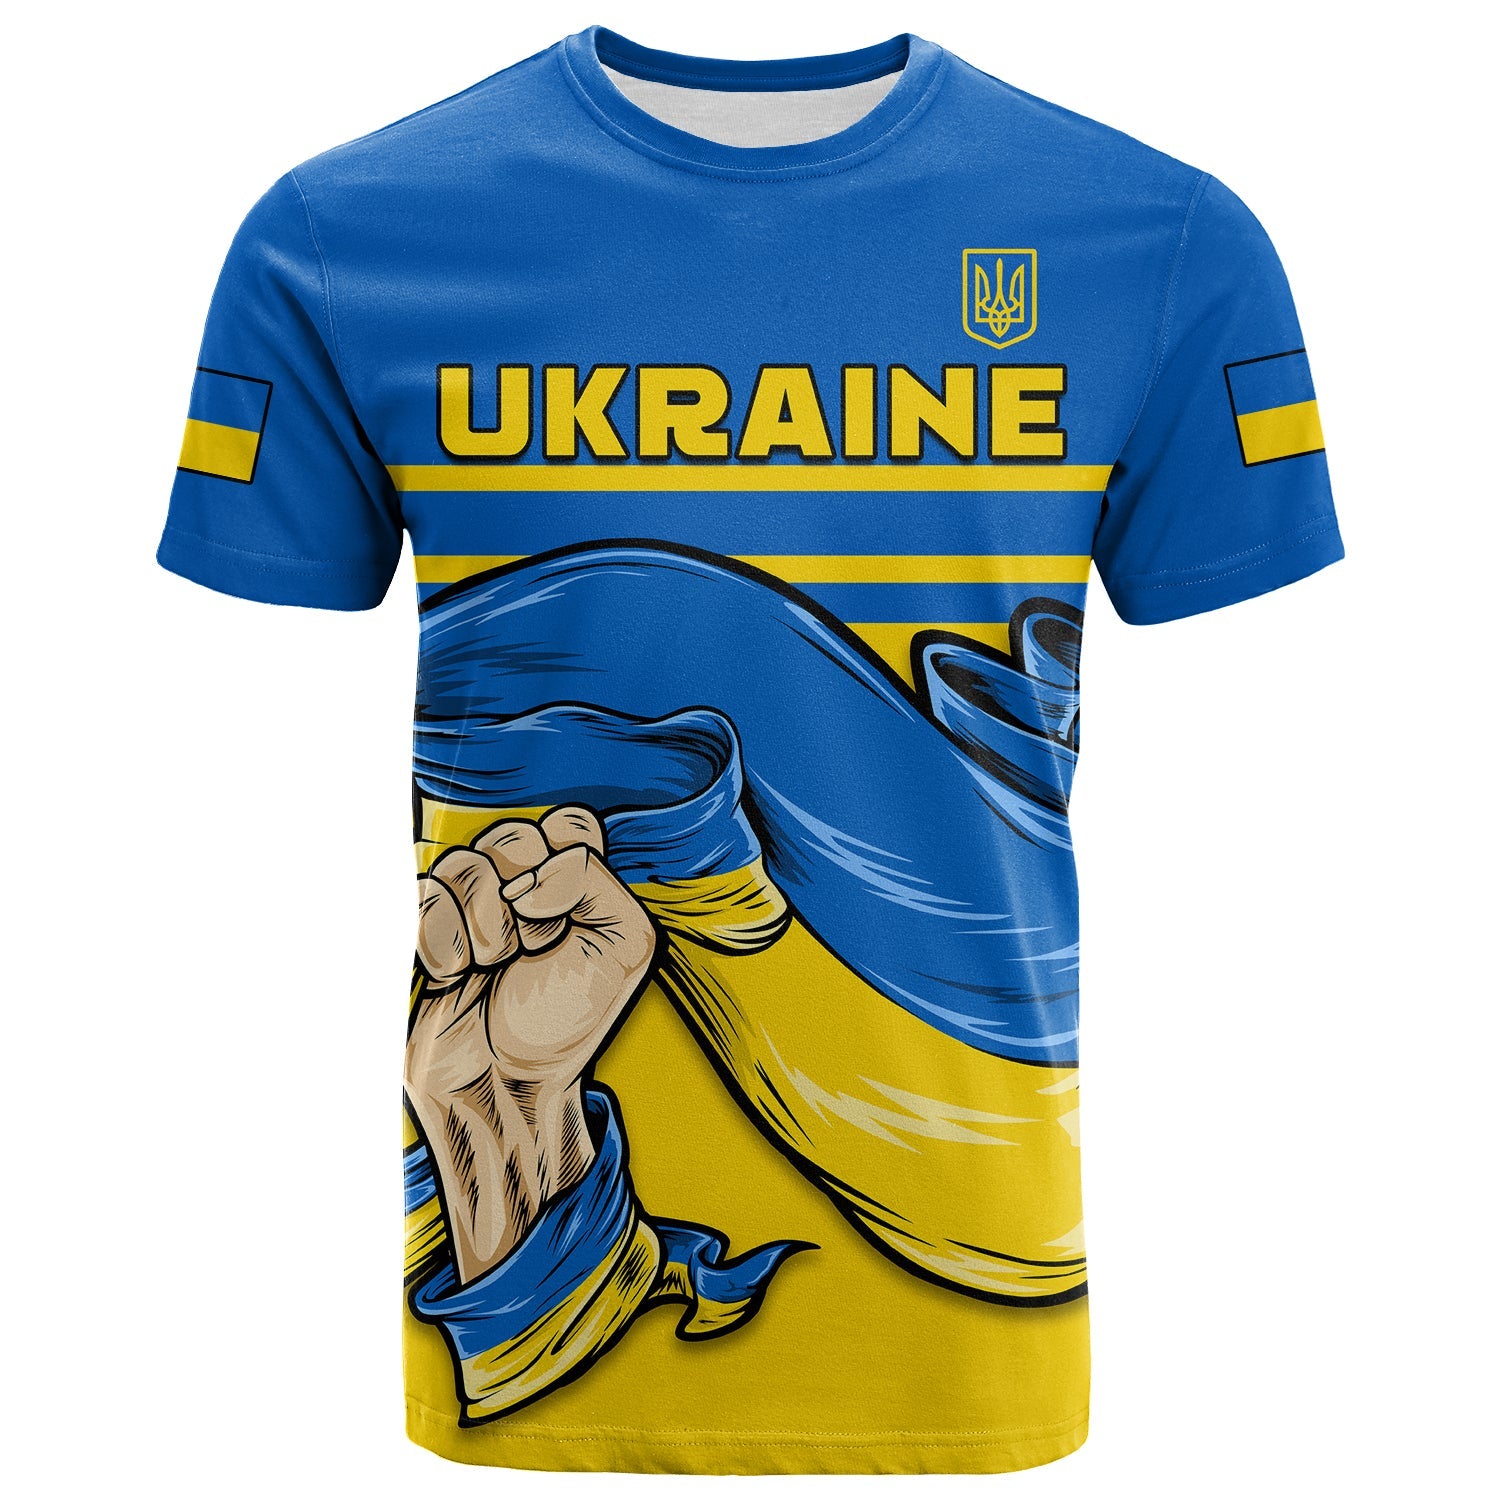 ukraine-t-shirt-strong-ukrainian